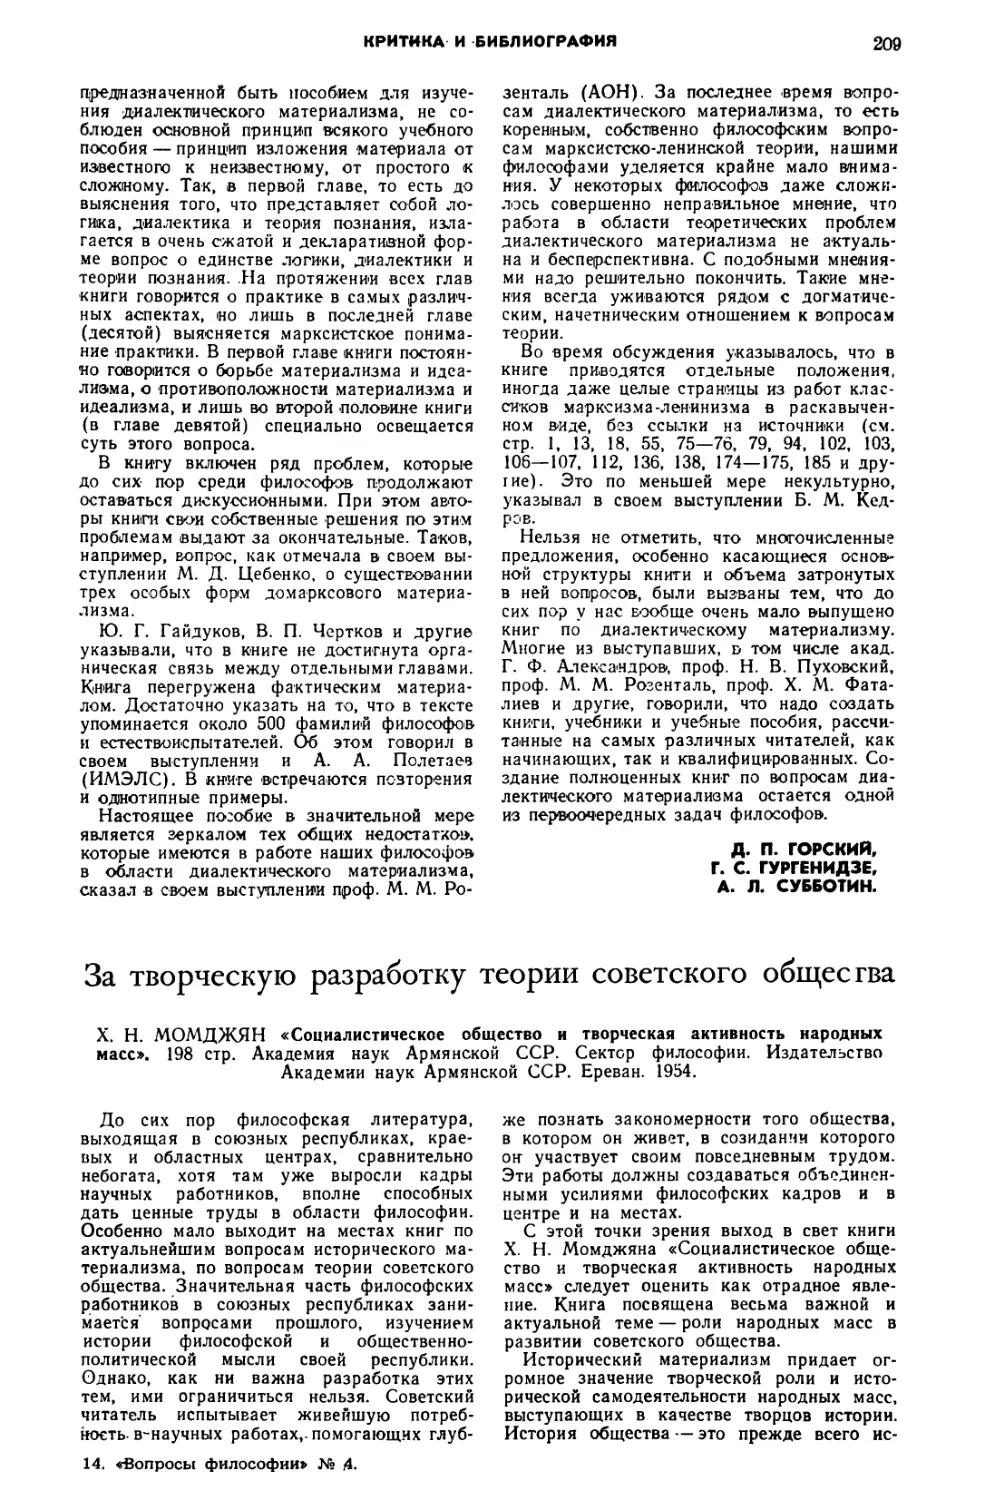 Г. Е. Глезерман — За творческую разработку теории советского общества